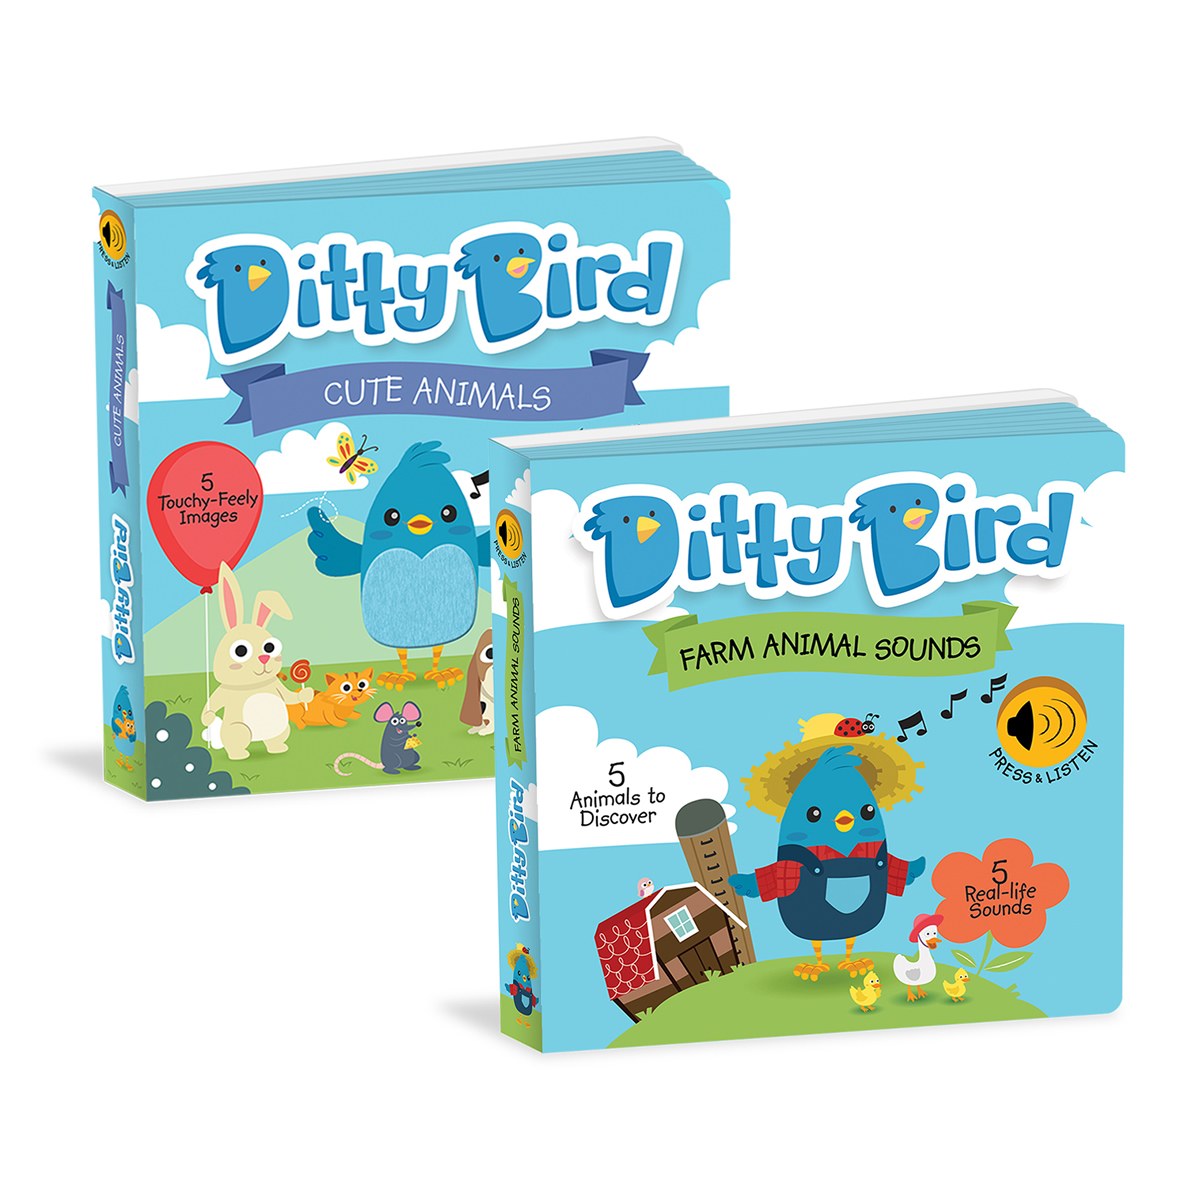 Ditty Bird Ditty Bird Farm Animal and Cute Animal Sound Books - Set of 2